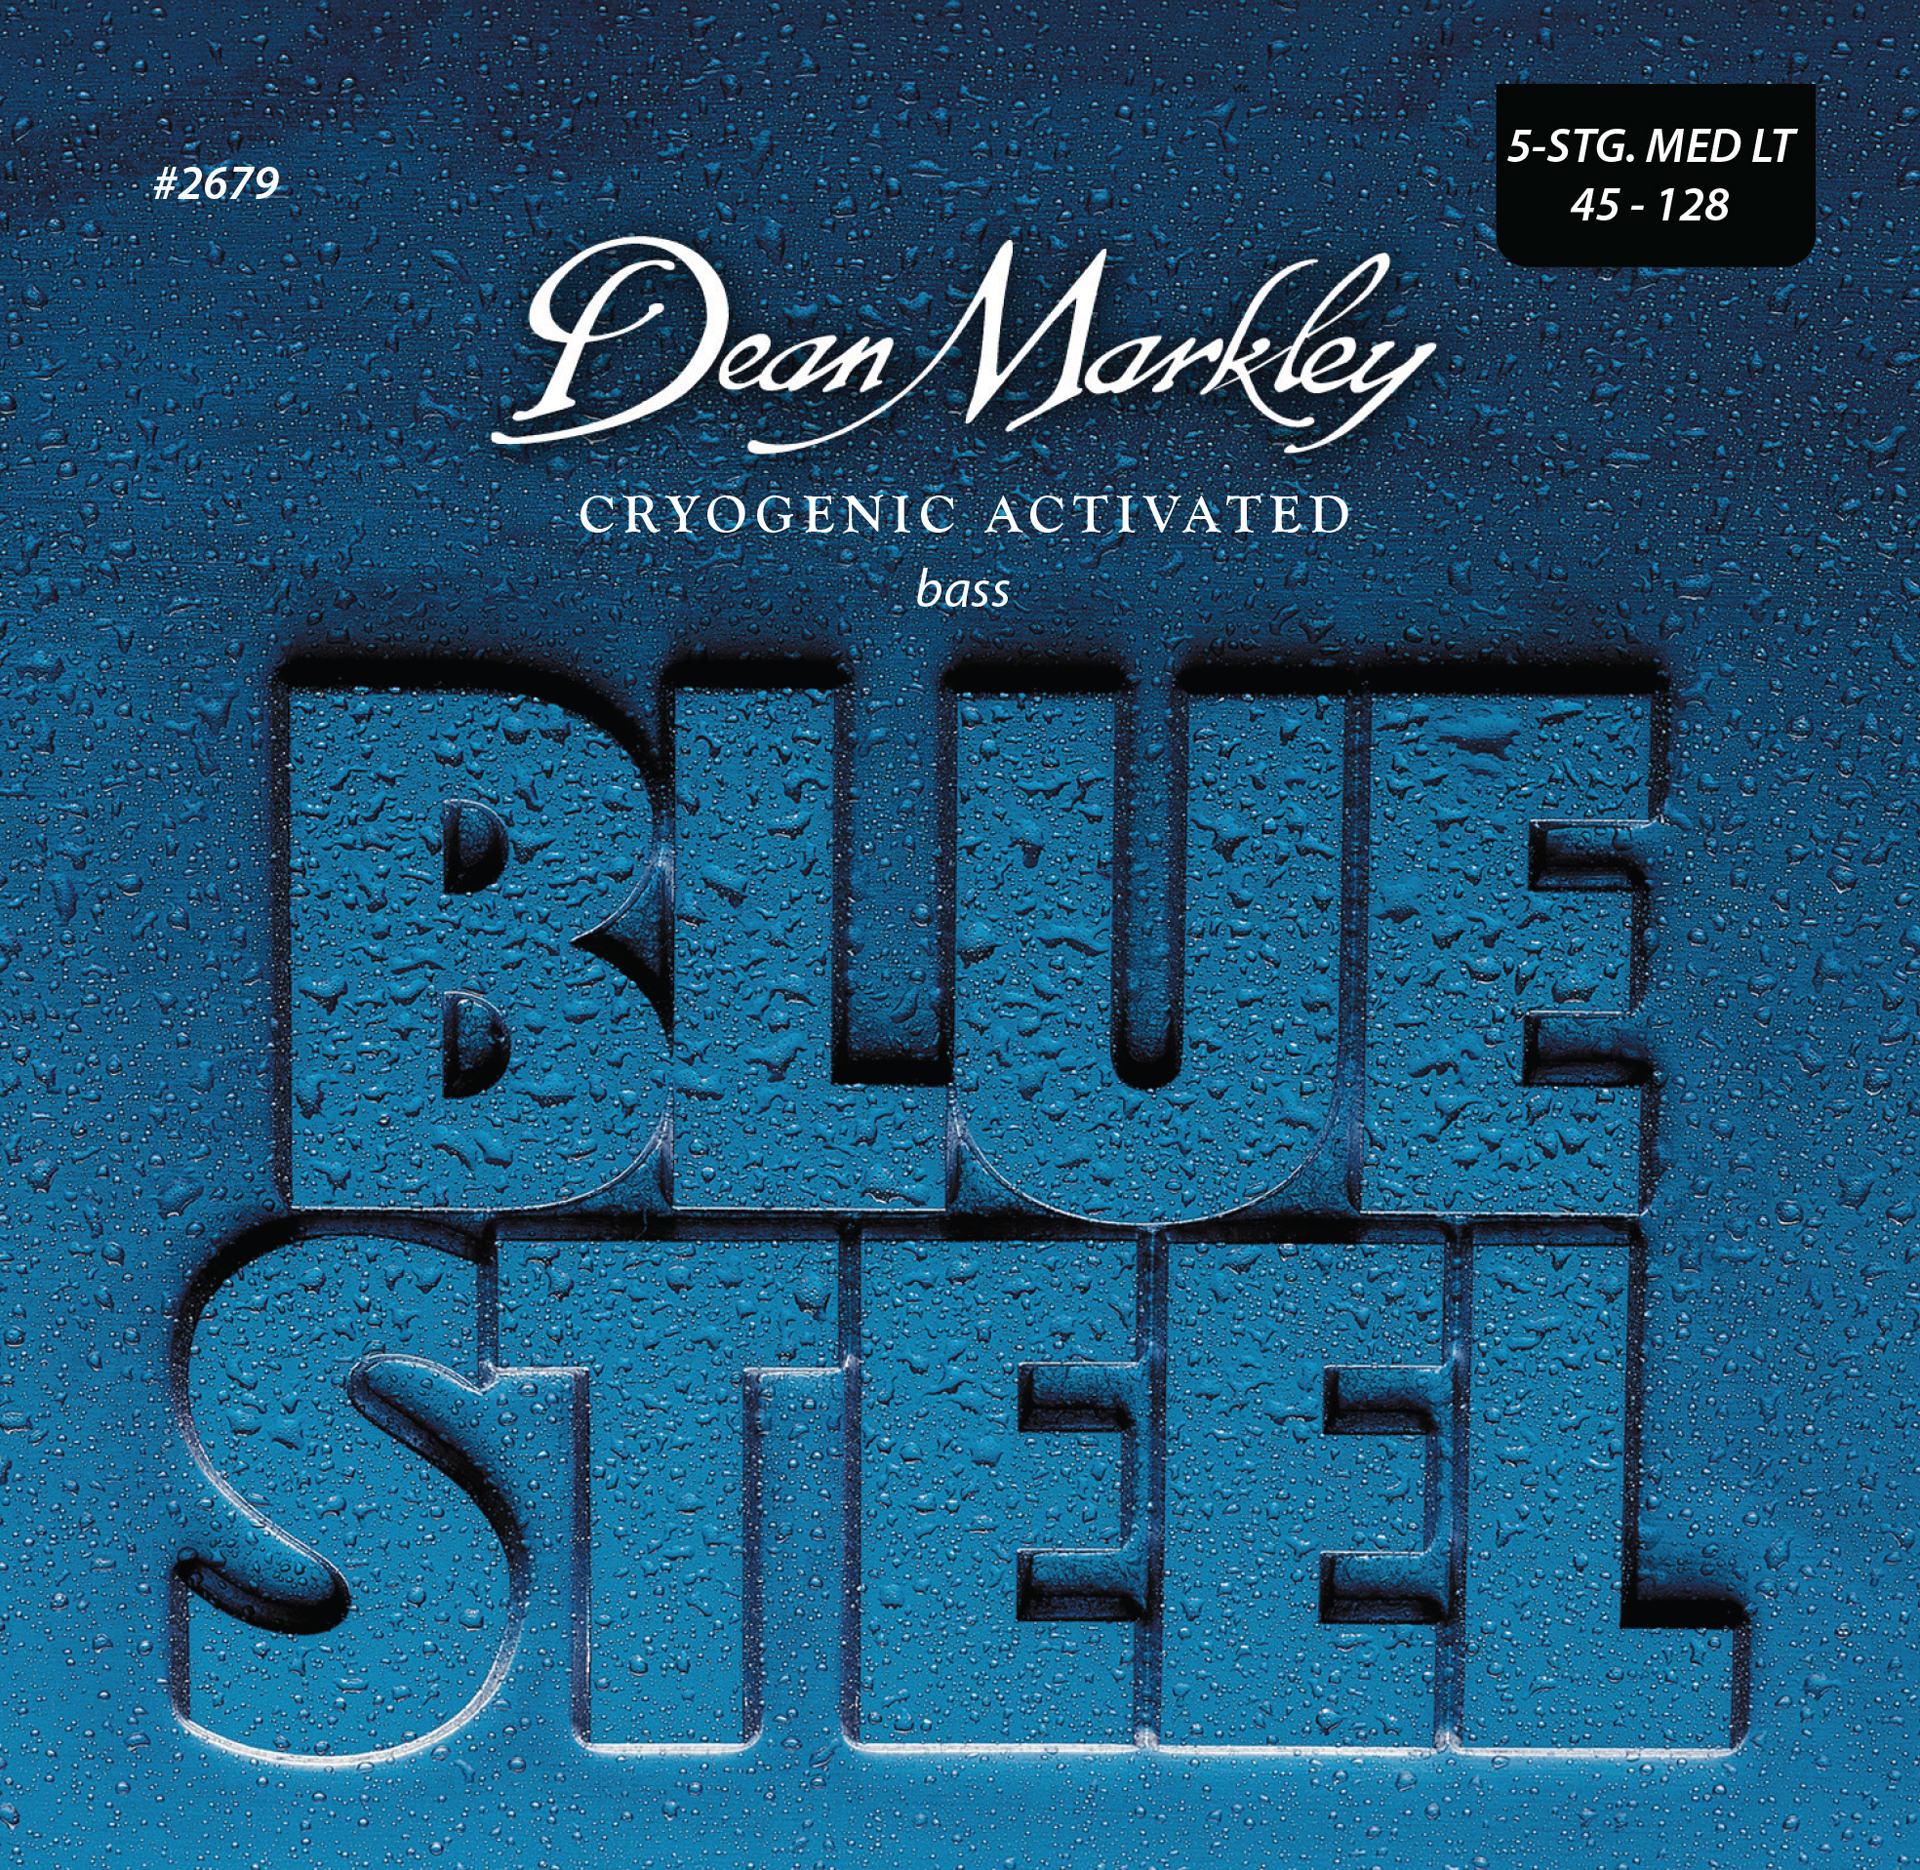 Dean Markley Blue Steel - 2679 - Electric Bass String Set, Stainless Steel, 5-String, Medium Light, .045-.128